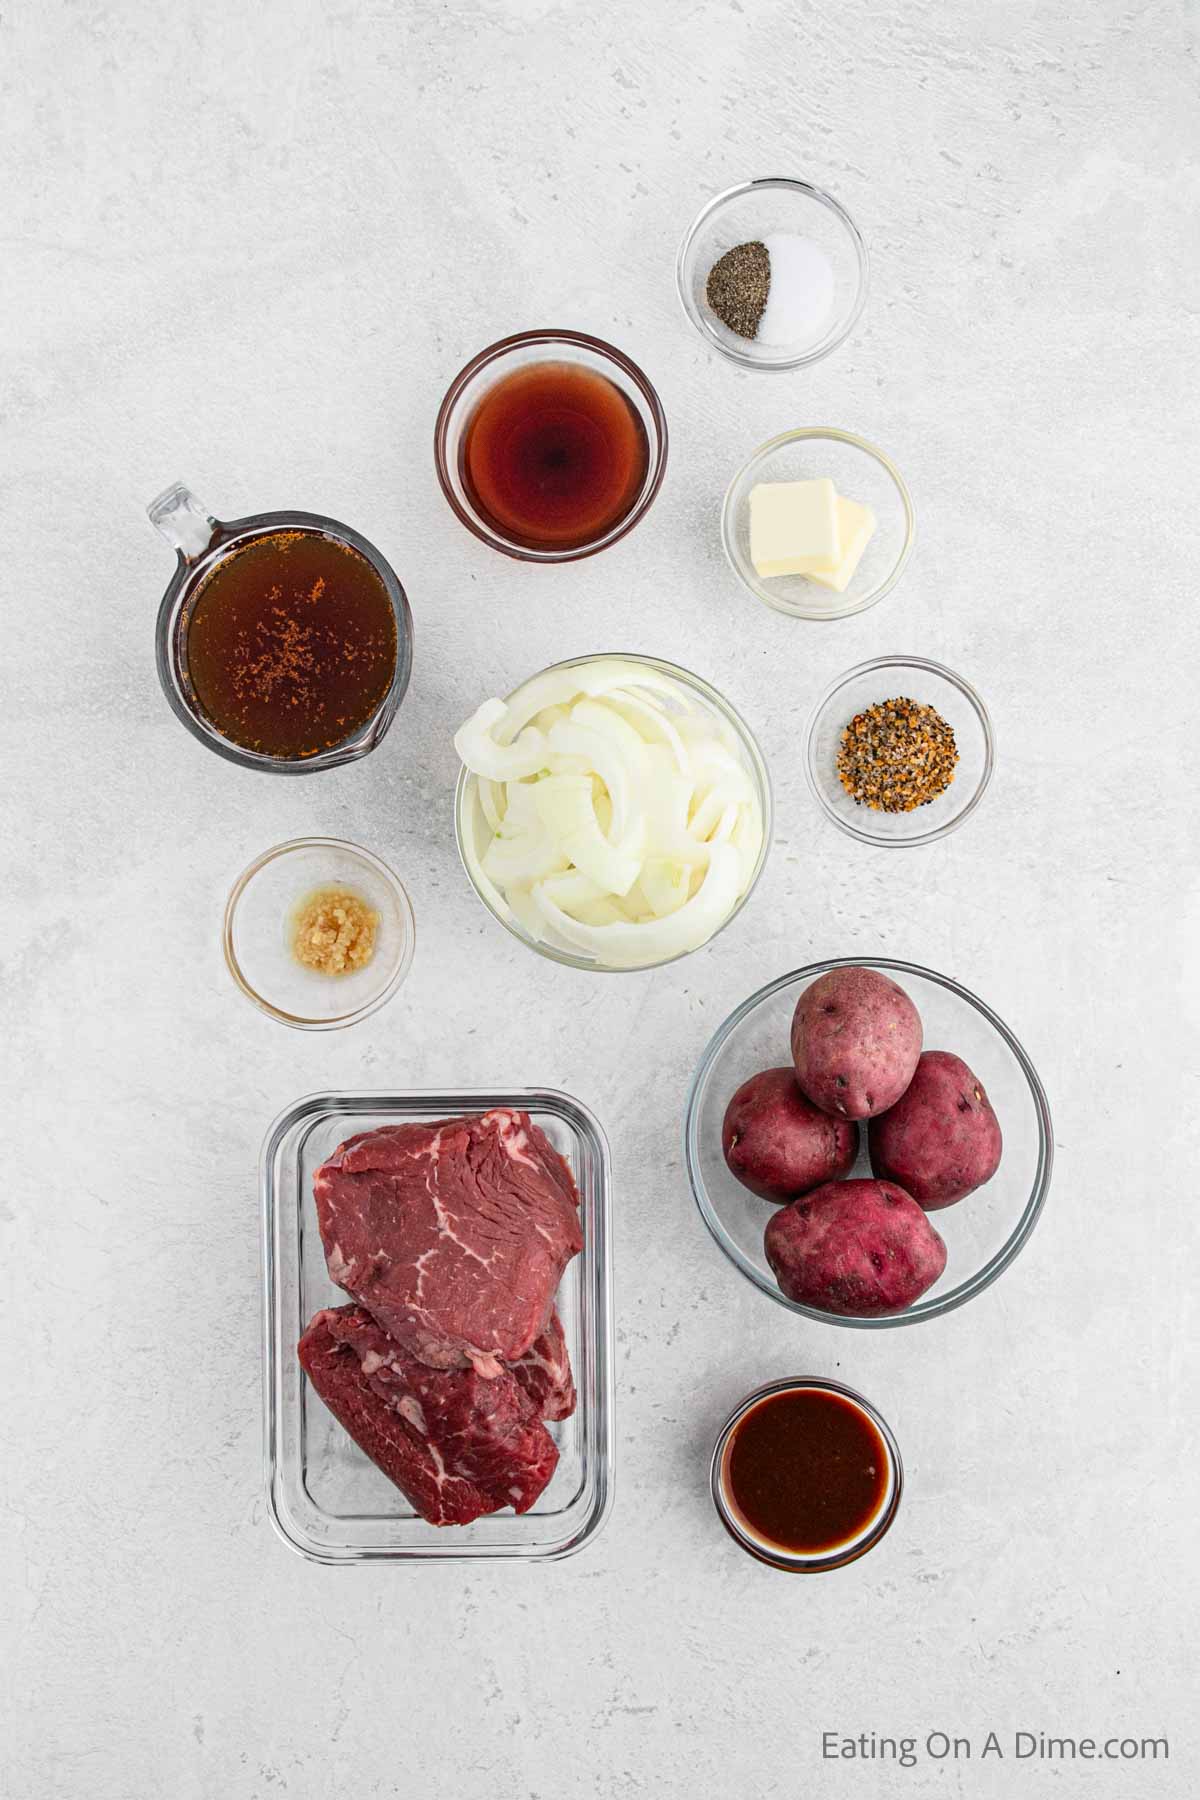 Instant pot steak ingredients - round steak, red wine vinegar, a1 sauce, onion, steak seasoning, beef stock, red potatoes, minced garlic, salt, pepper, butter